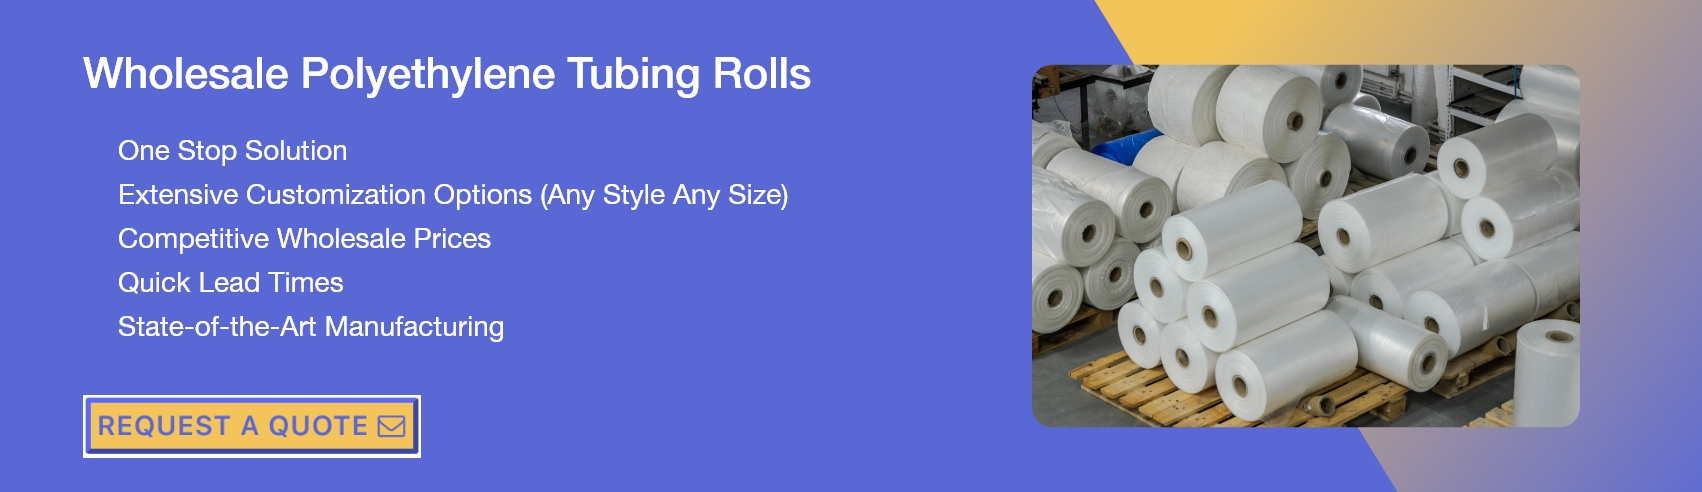 Wholesale Polyethylene Tubing Rolls